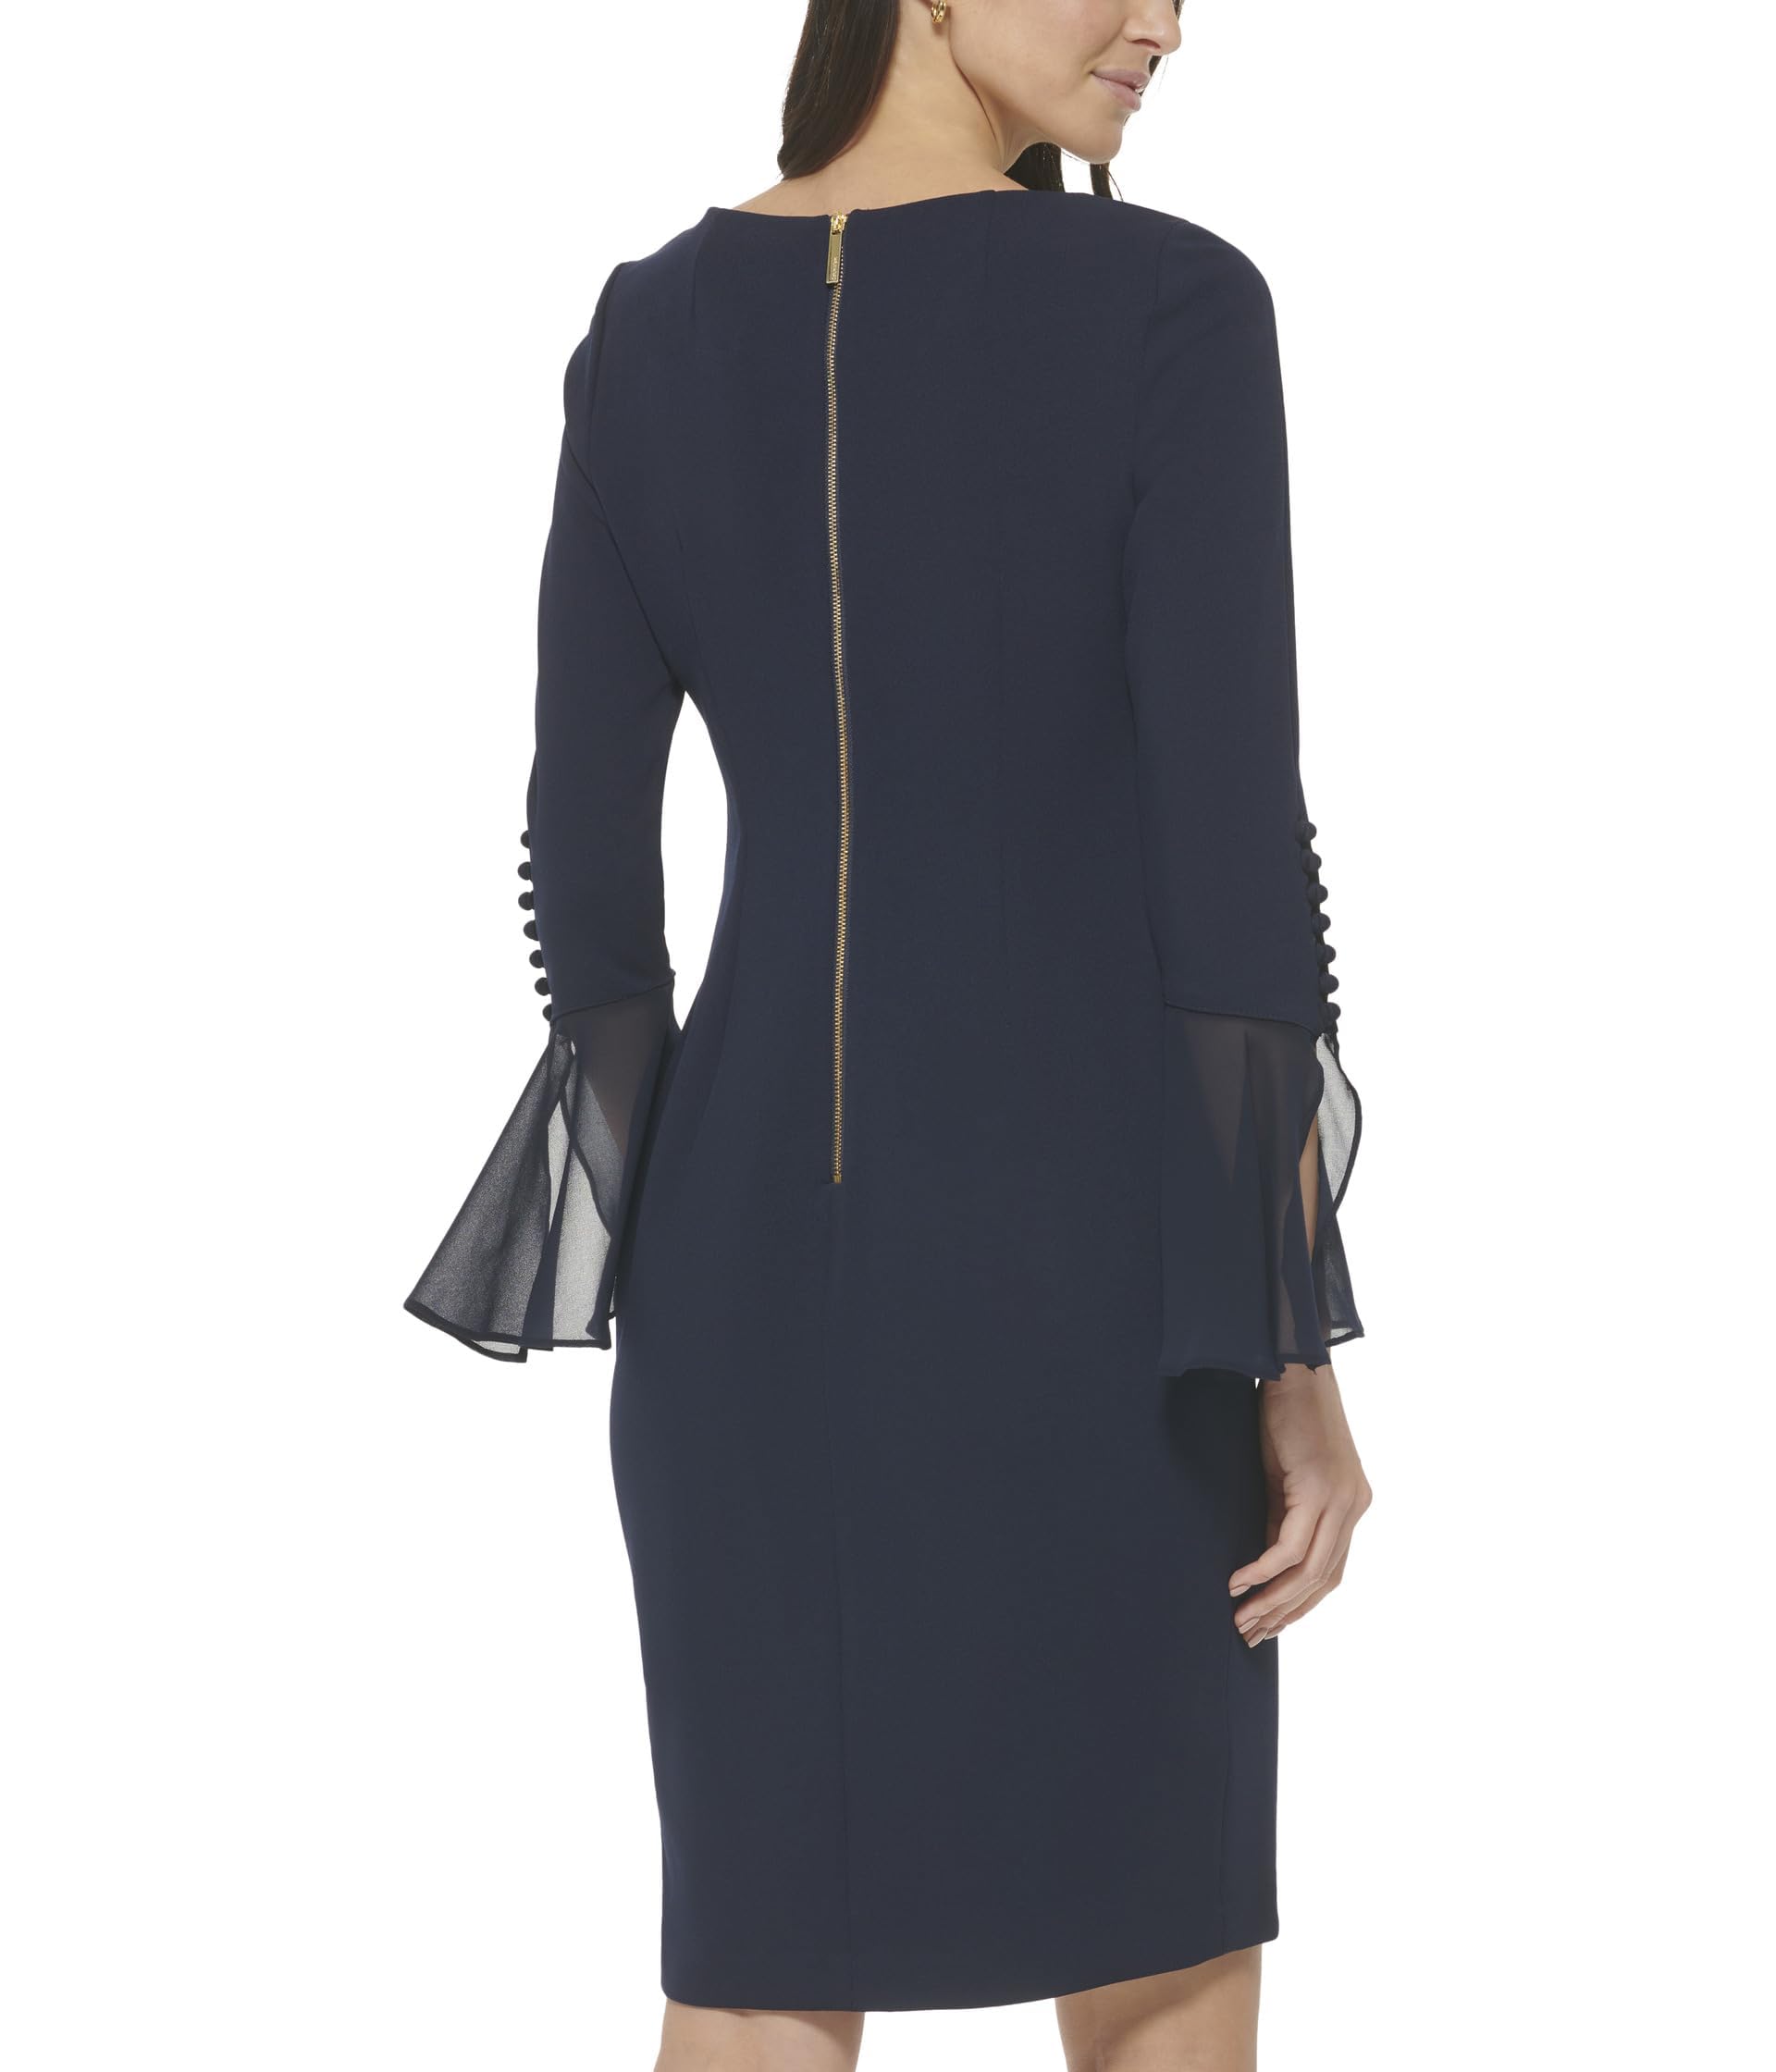 Calvin Klein Women's Scuba Crepe Dress with Chiffon Bell Sleeves